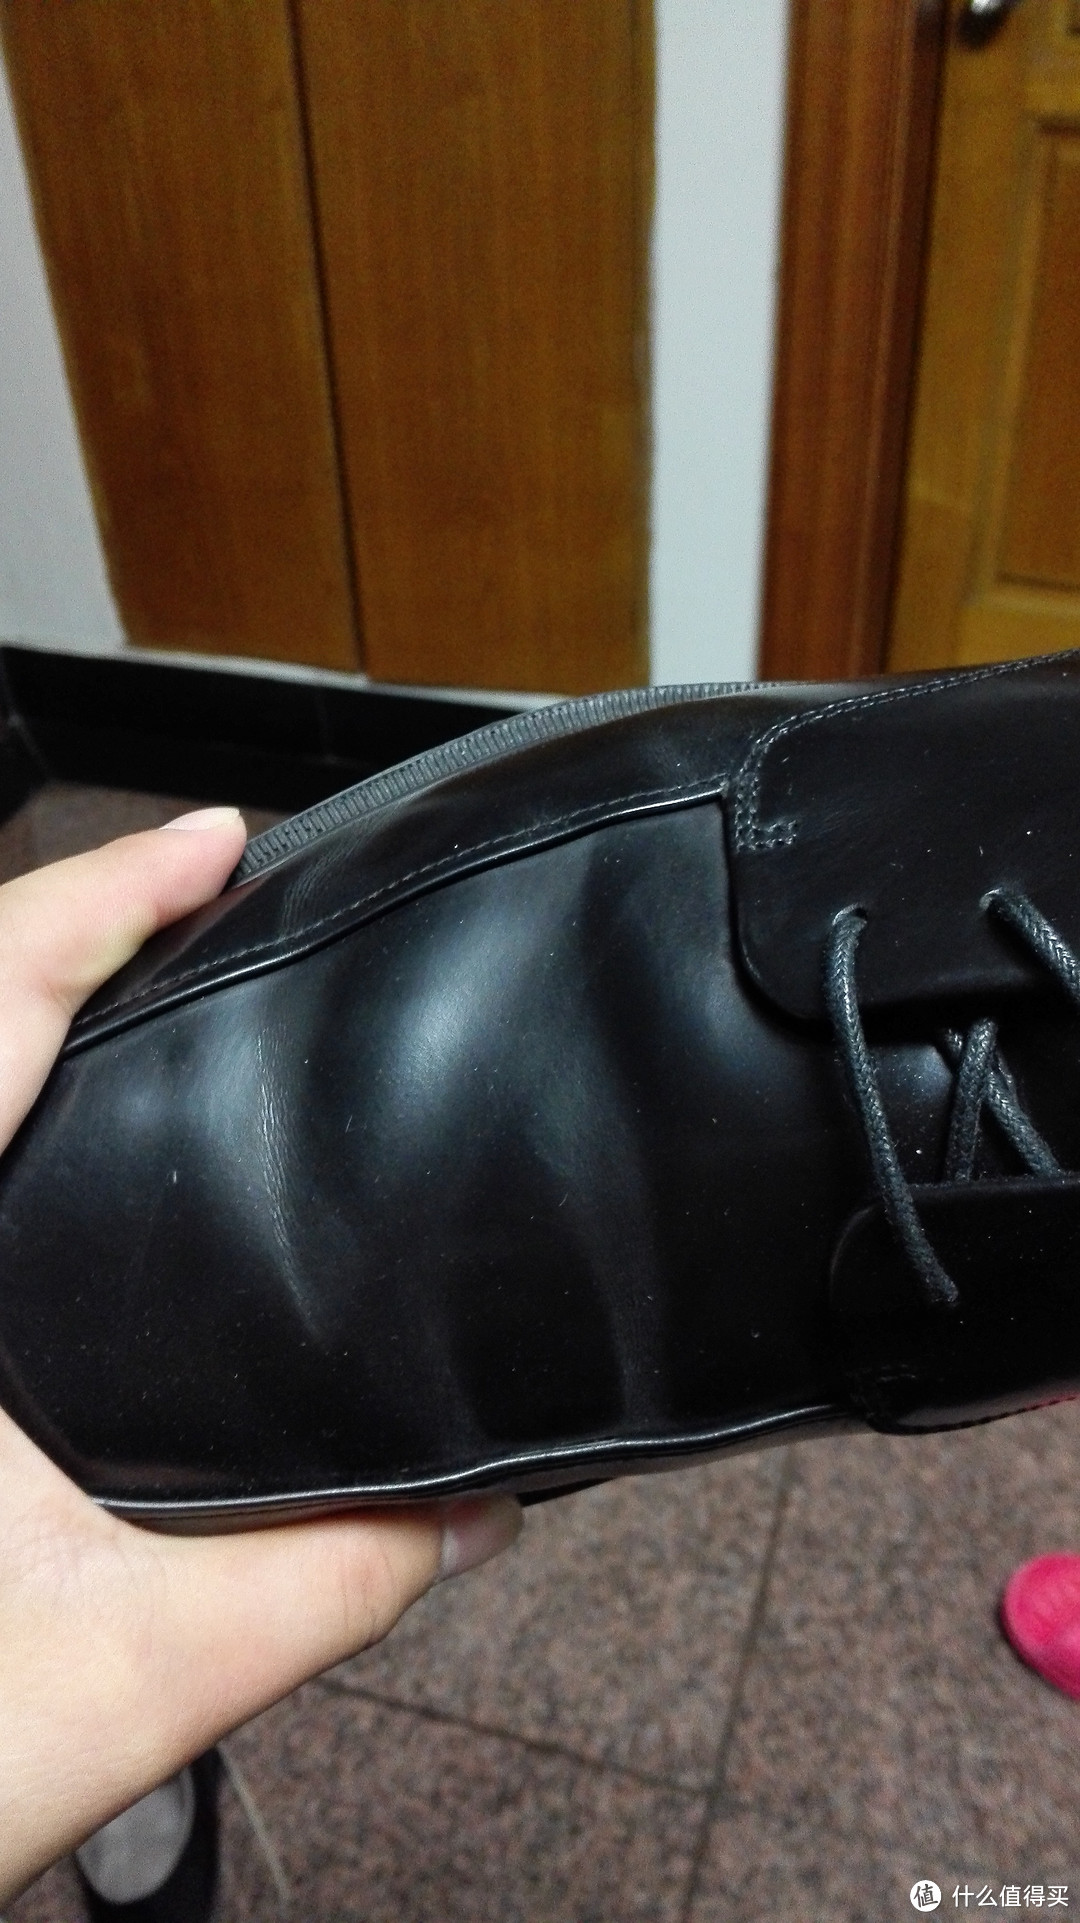 Calvin Klein Felix Boot 男鞋 & Polo Ralph Lauren Woodley 休闲鞋 & Rockport Waterproof Evander Oxford 系带皮鞋